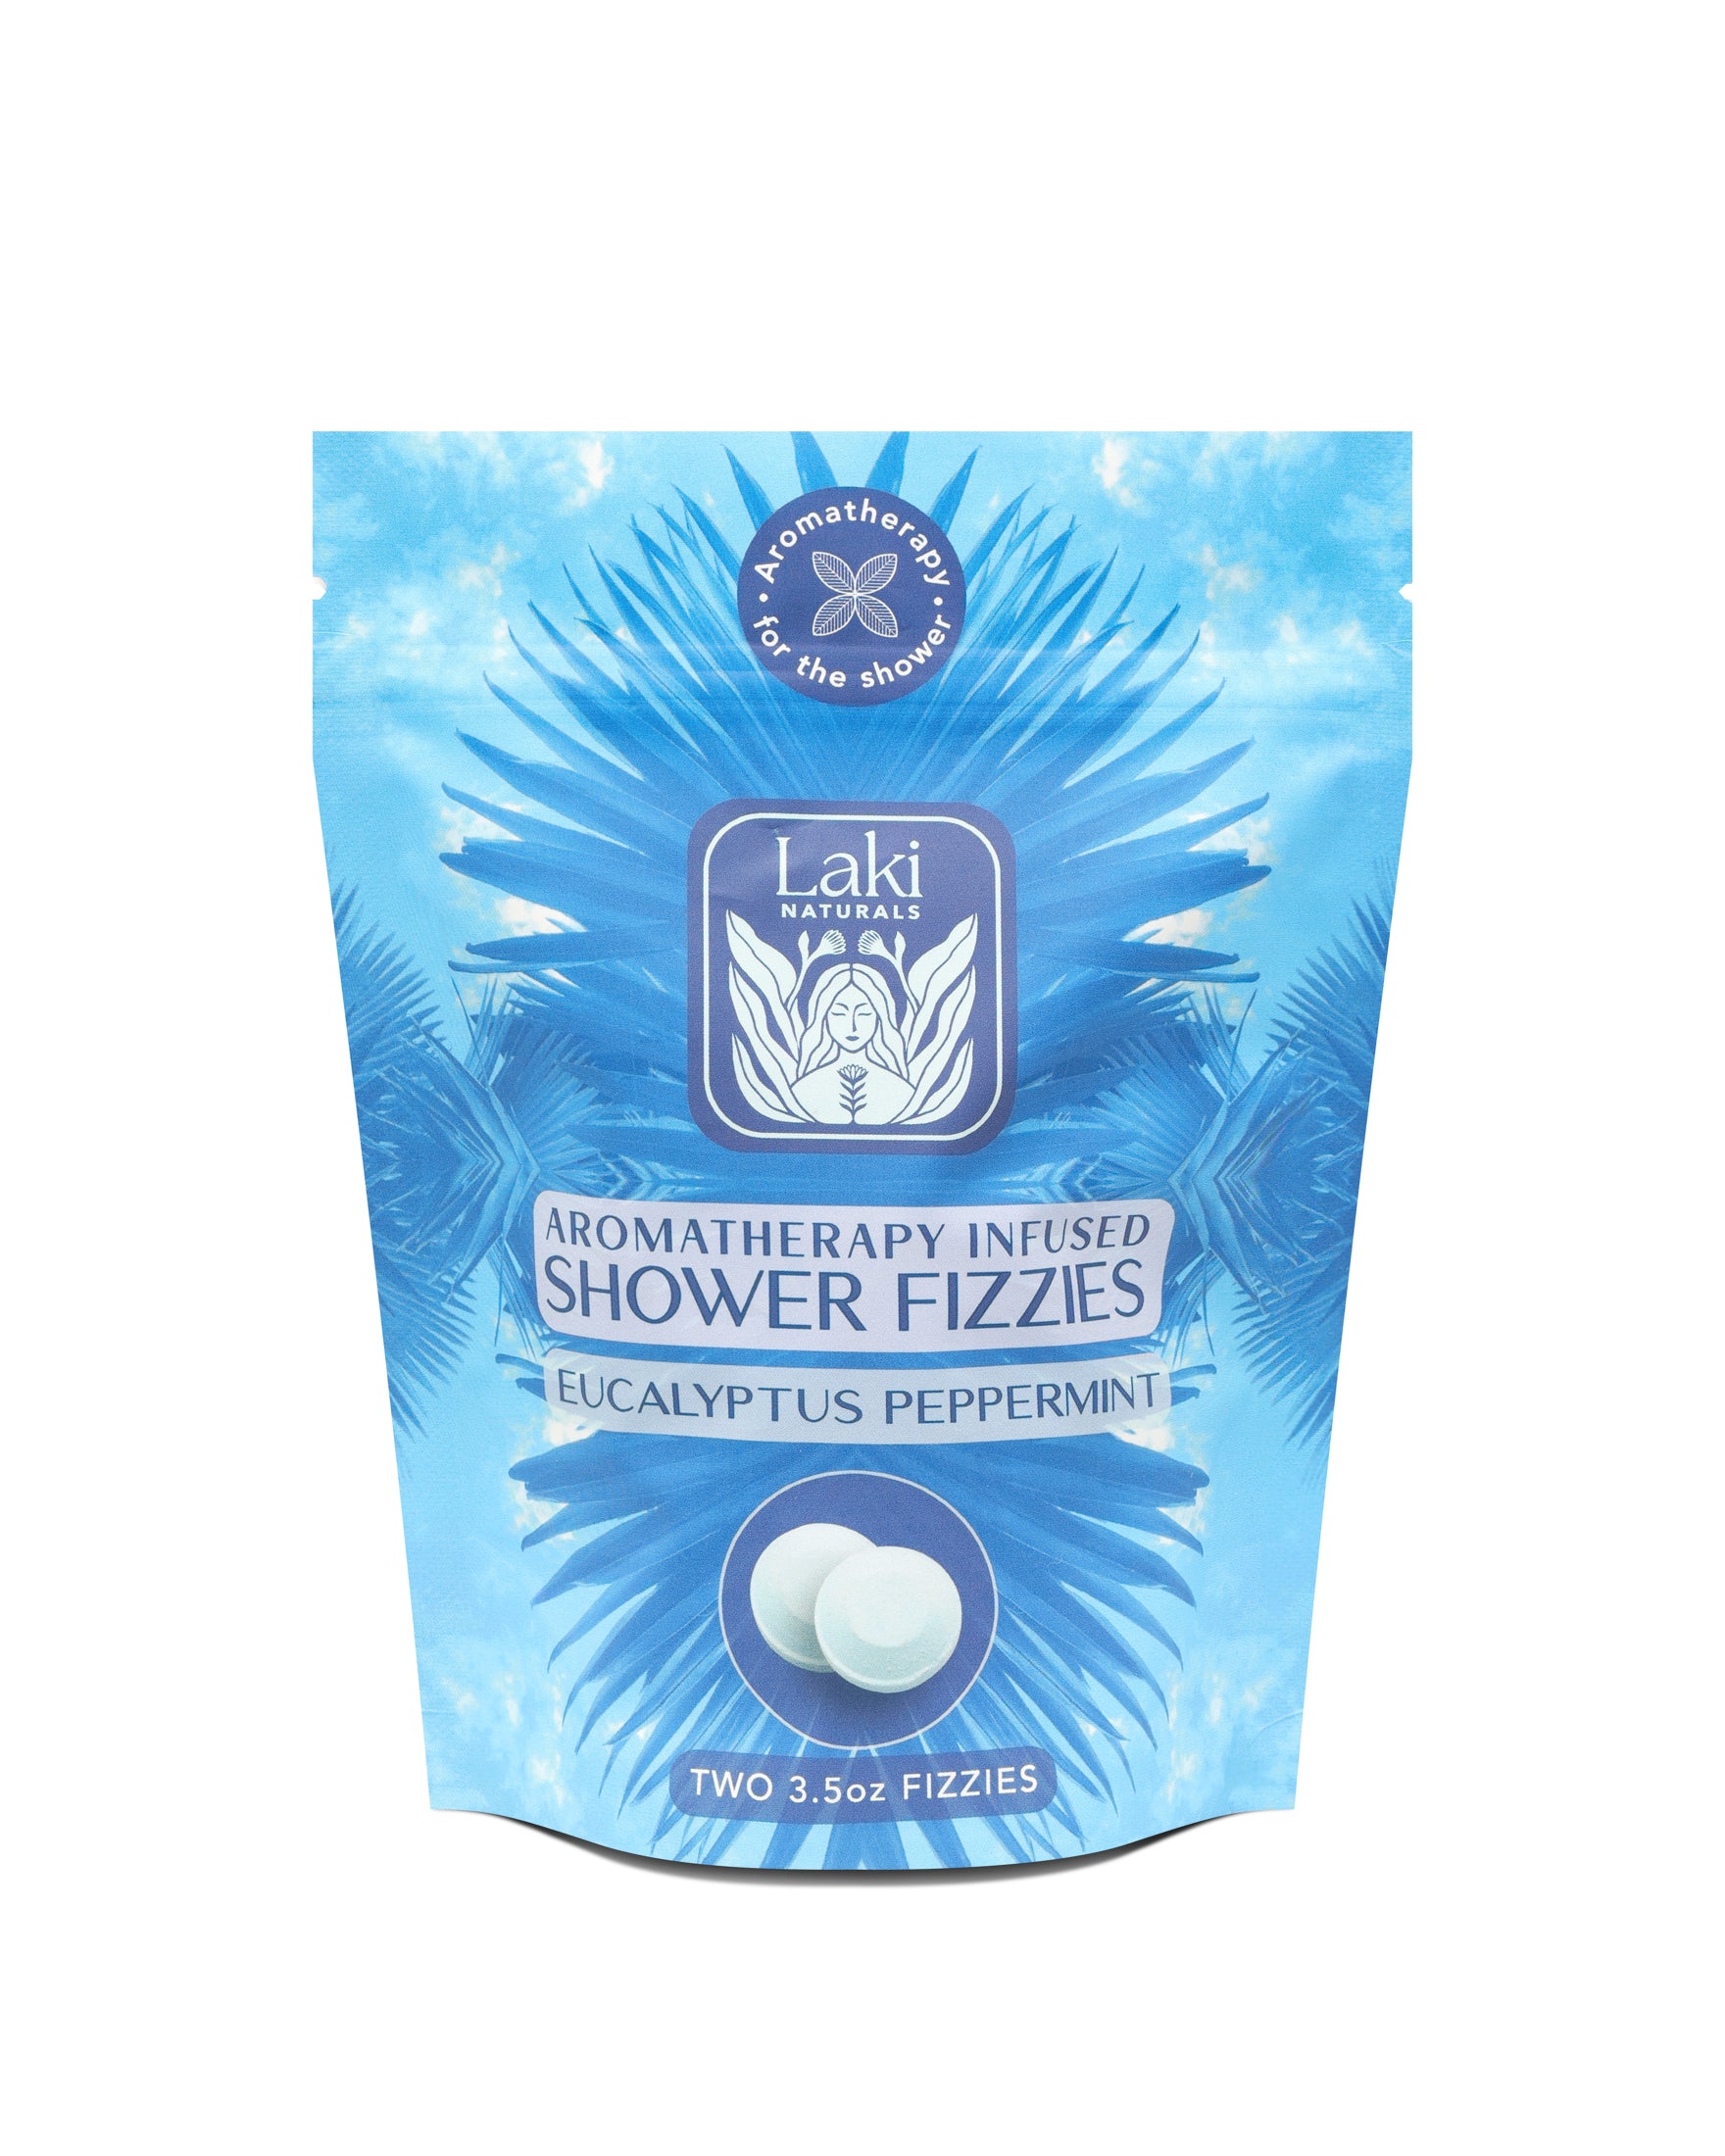 Rose Garden Shower Fizzies - Laki Naturals